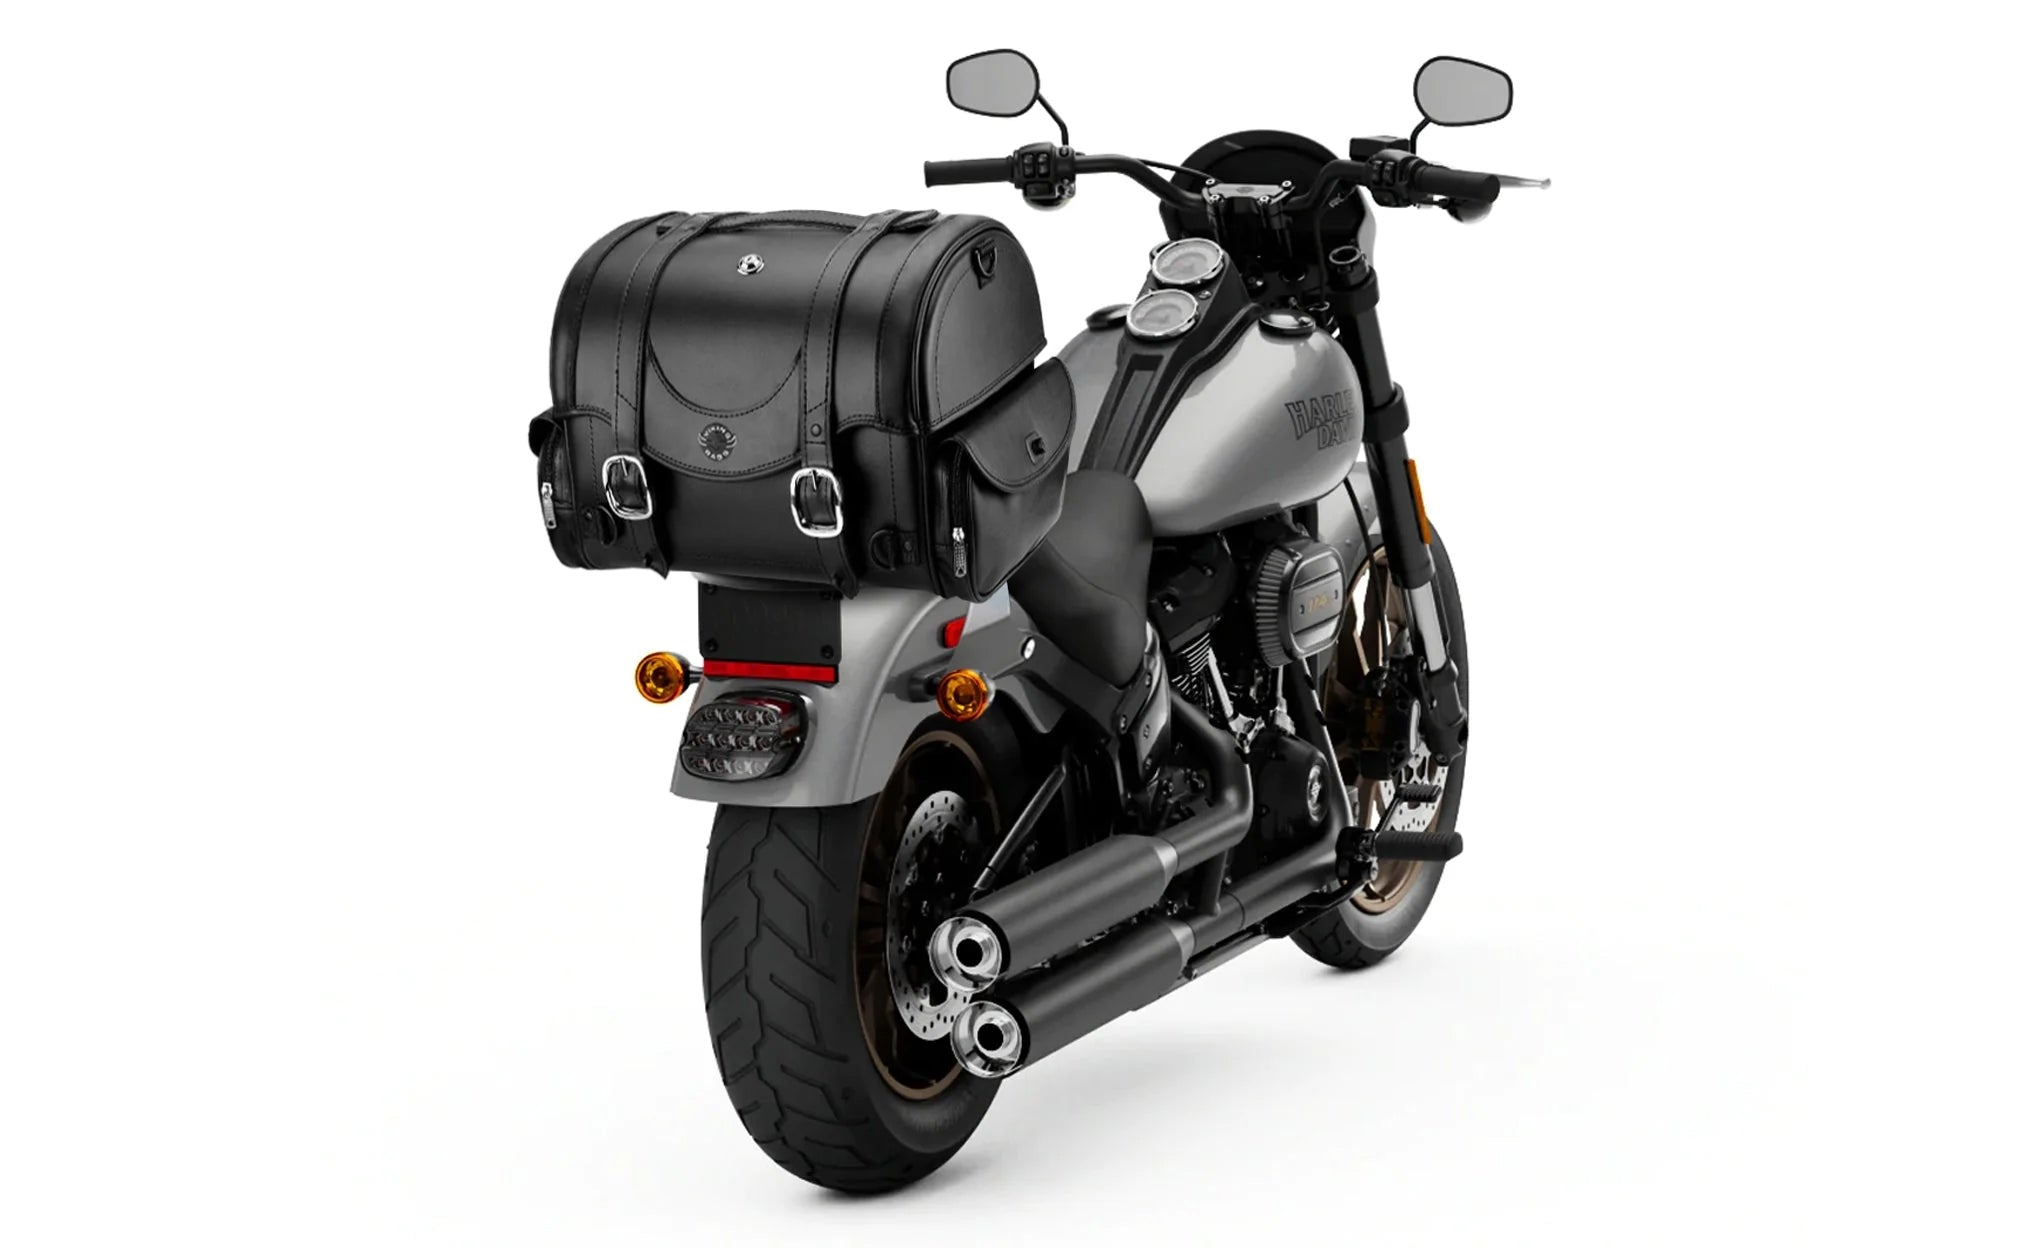 21L - Century Medium Triumph Leather Motorcycle Sissy Bar Bag on Bike Photo @expand